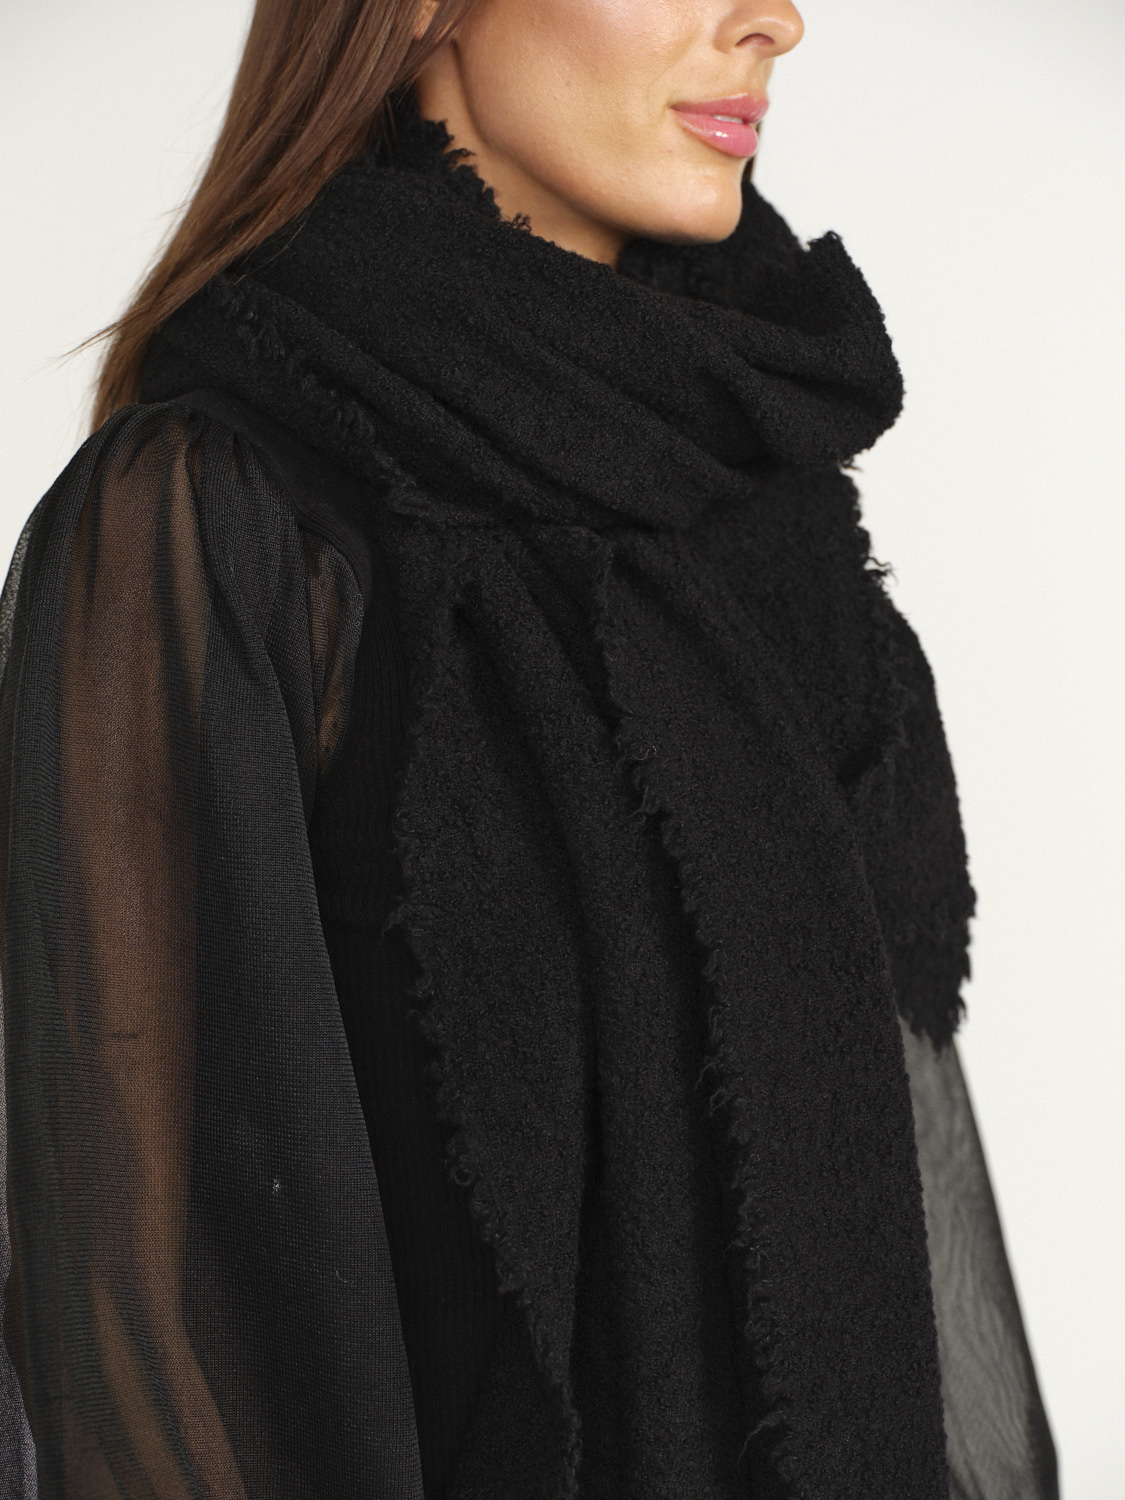 Faliero Sarti Alexia - Wool and Cashmere Rectangular Scarf black One Size